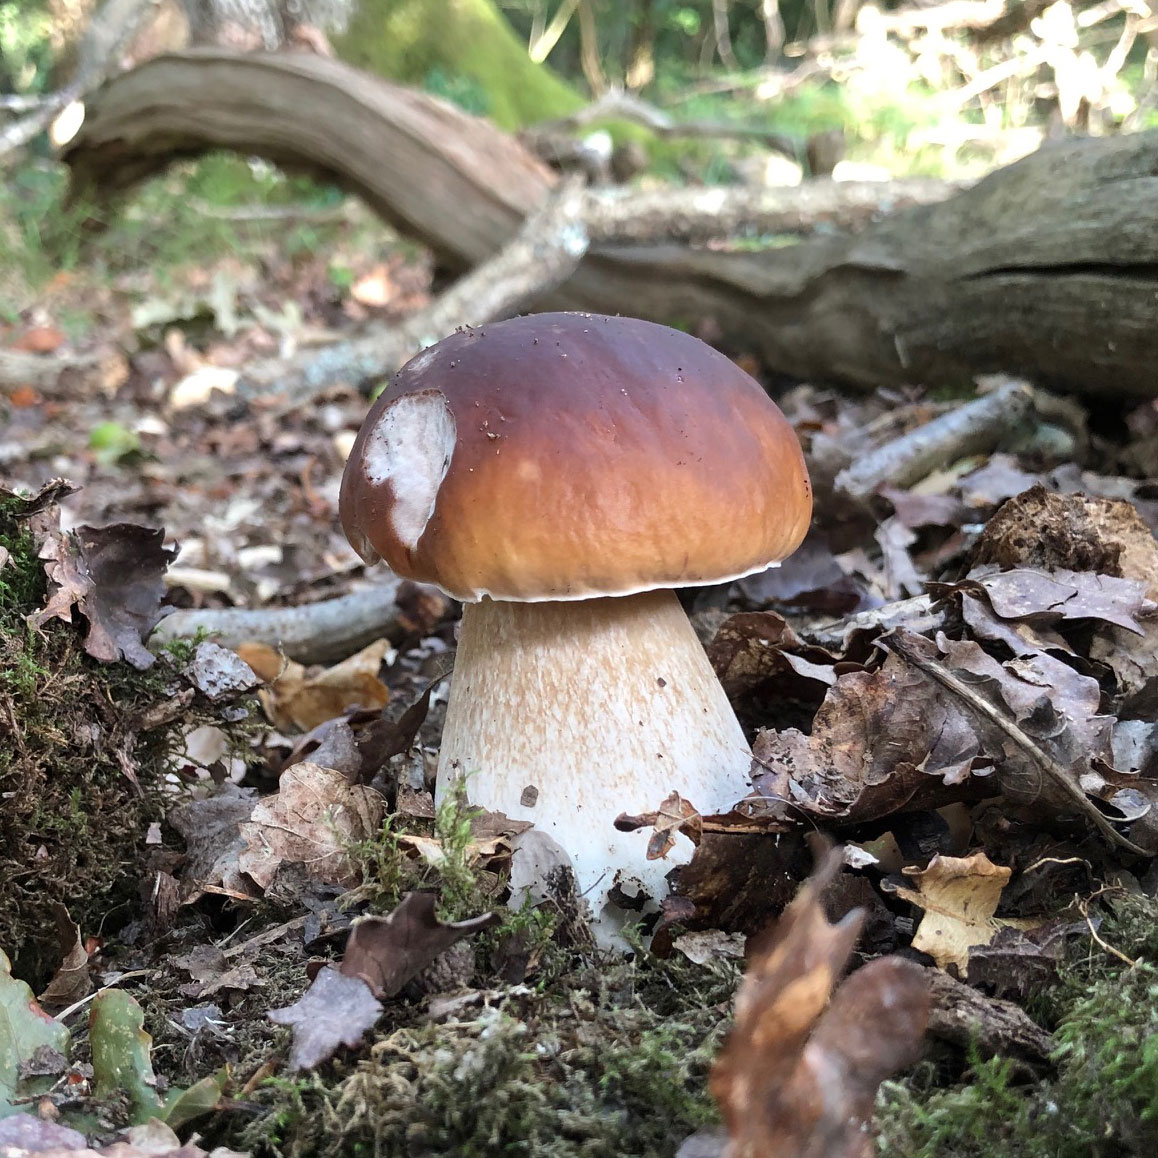 Wild chanterelle mushrooms